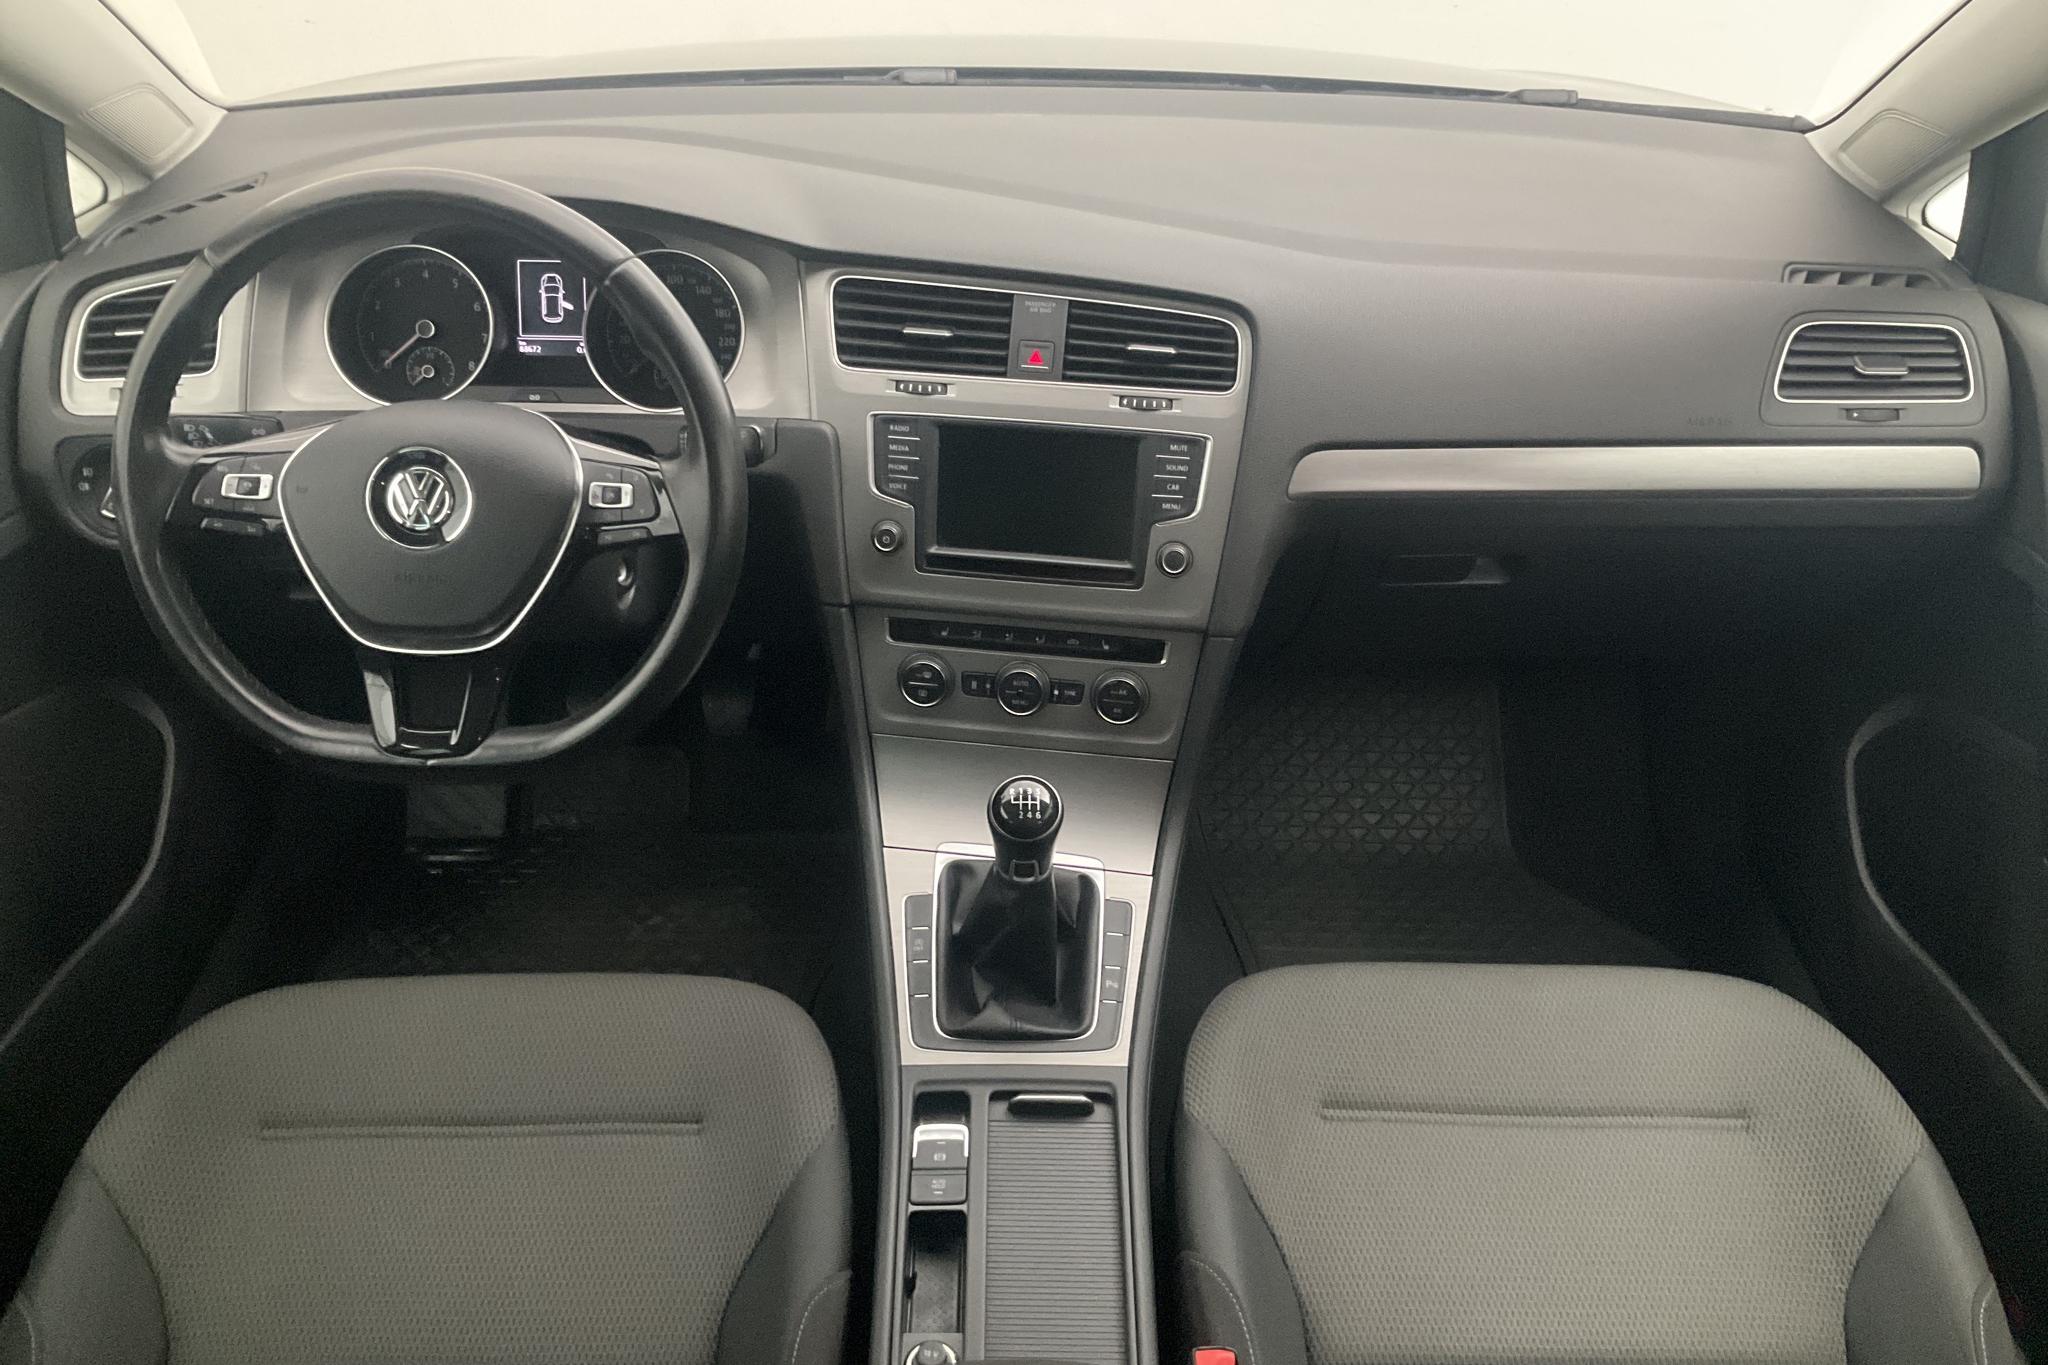 VW Golf VII 1.4 TGI 5dr (110hk) - 8 867 mil - Manuell - svart - 2017